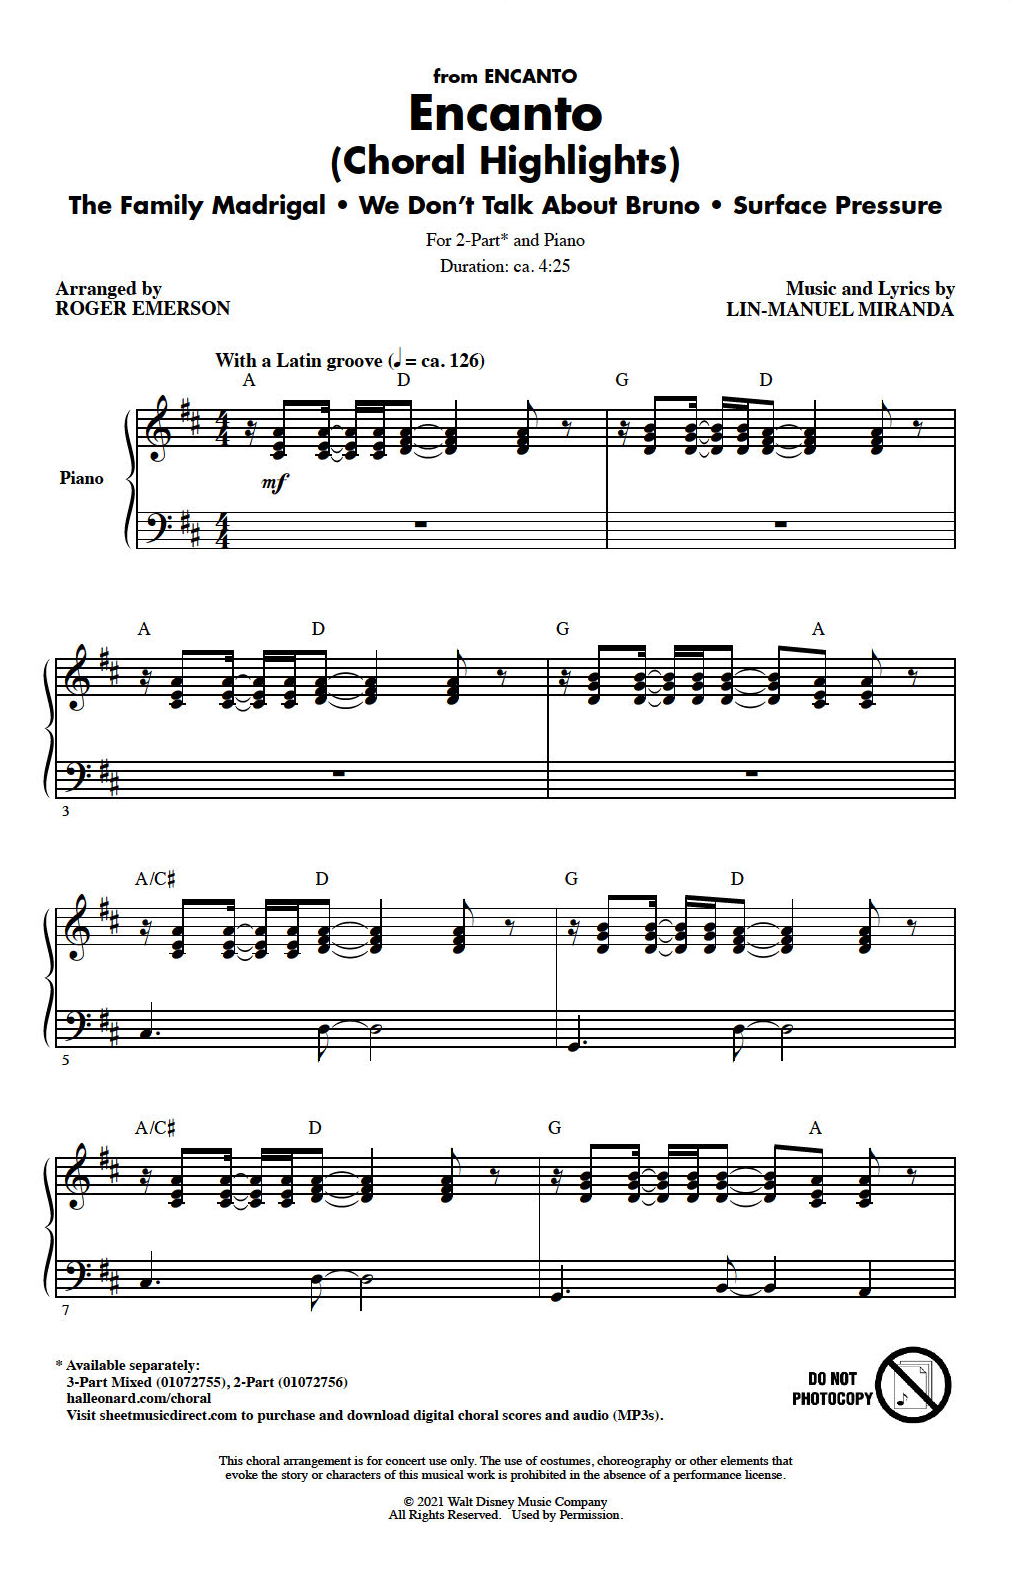 Lin-Manuel Miranda Encanto (Choral Highlights) (arr. Roger Emerson) Sheet Music Notes & Chords for 3-Part Mixed Choir - Download or Print PDF